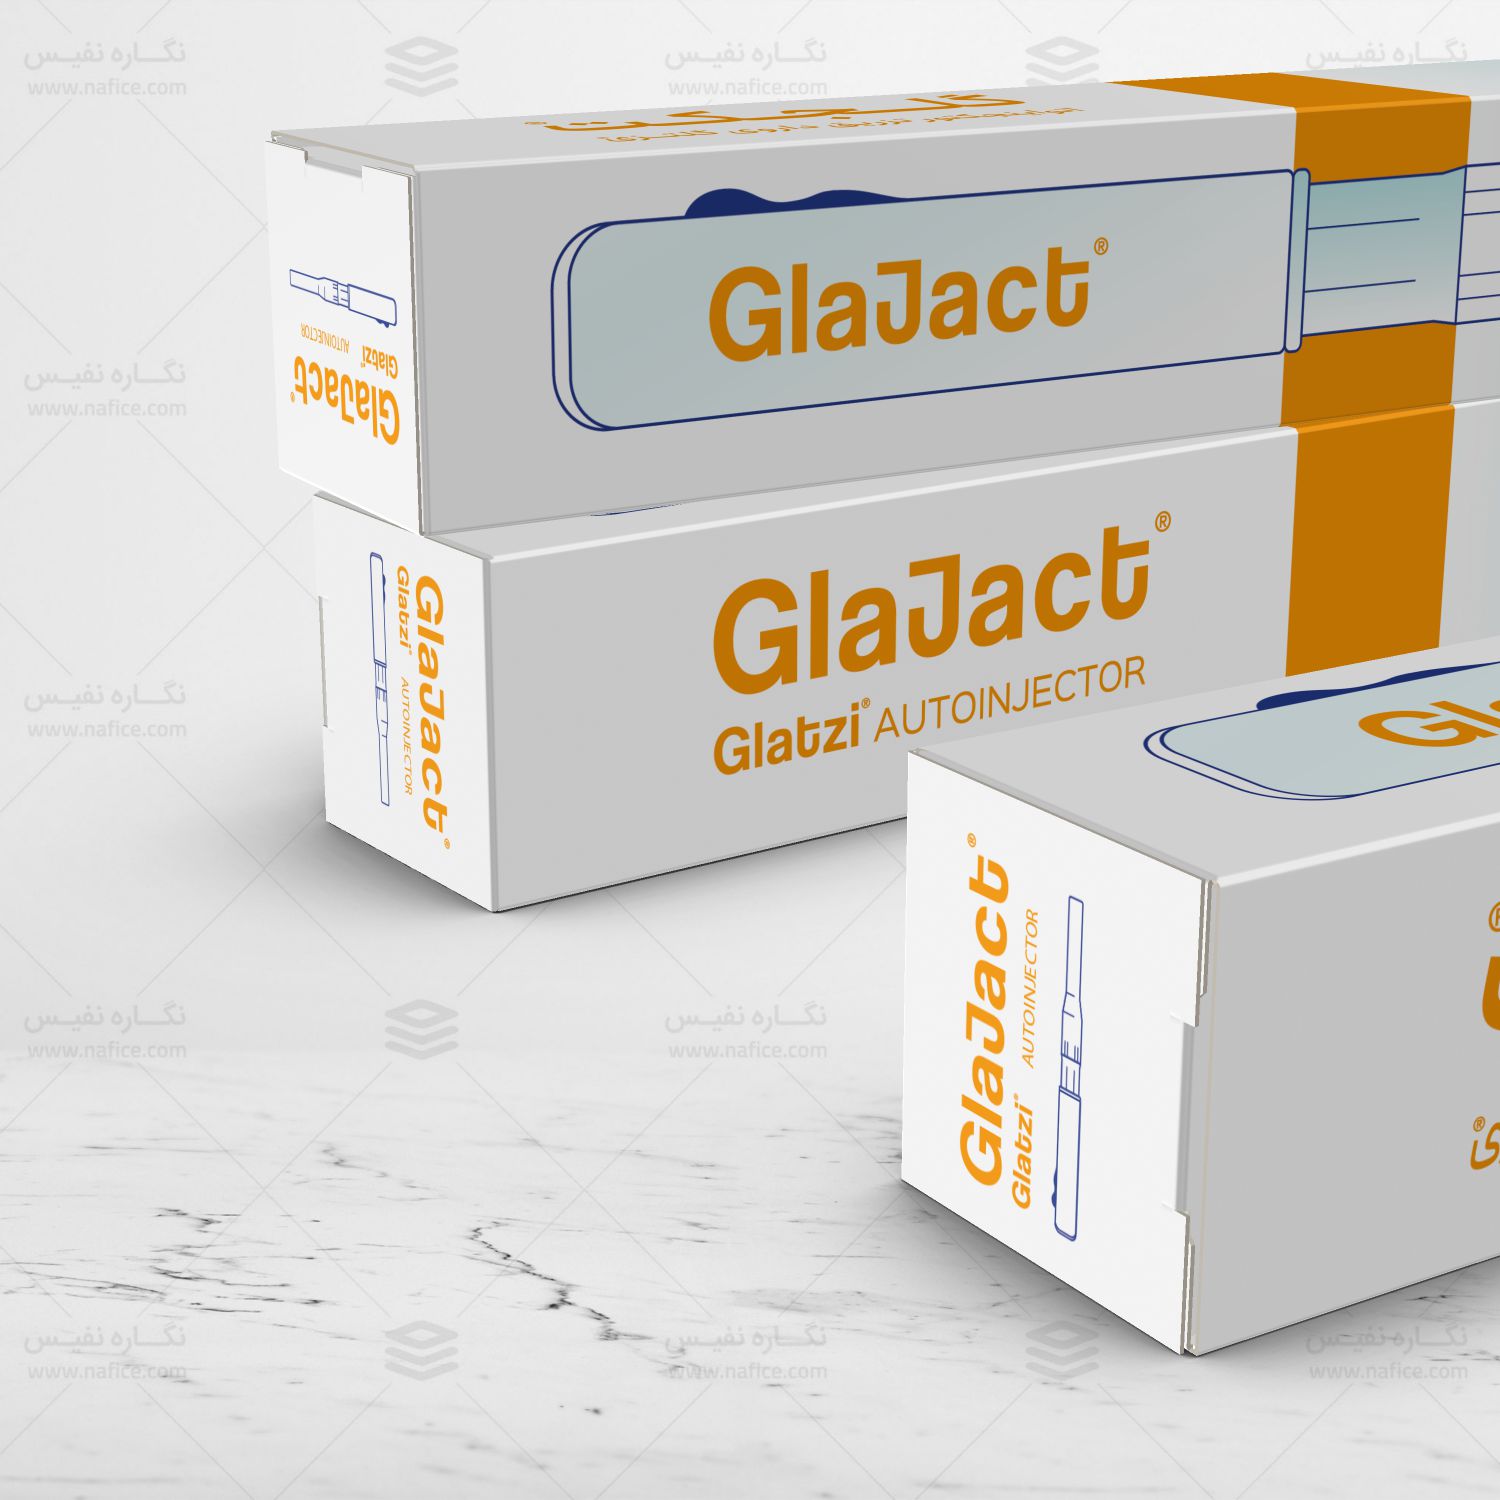 Glaject2 جعبه دستگاه پزشکی زیکافورت و گلجکت